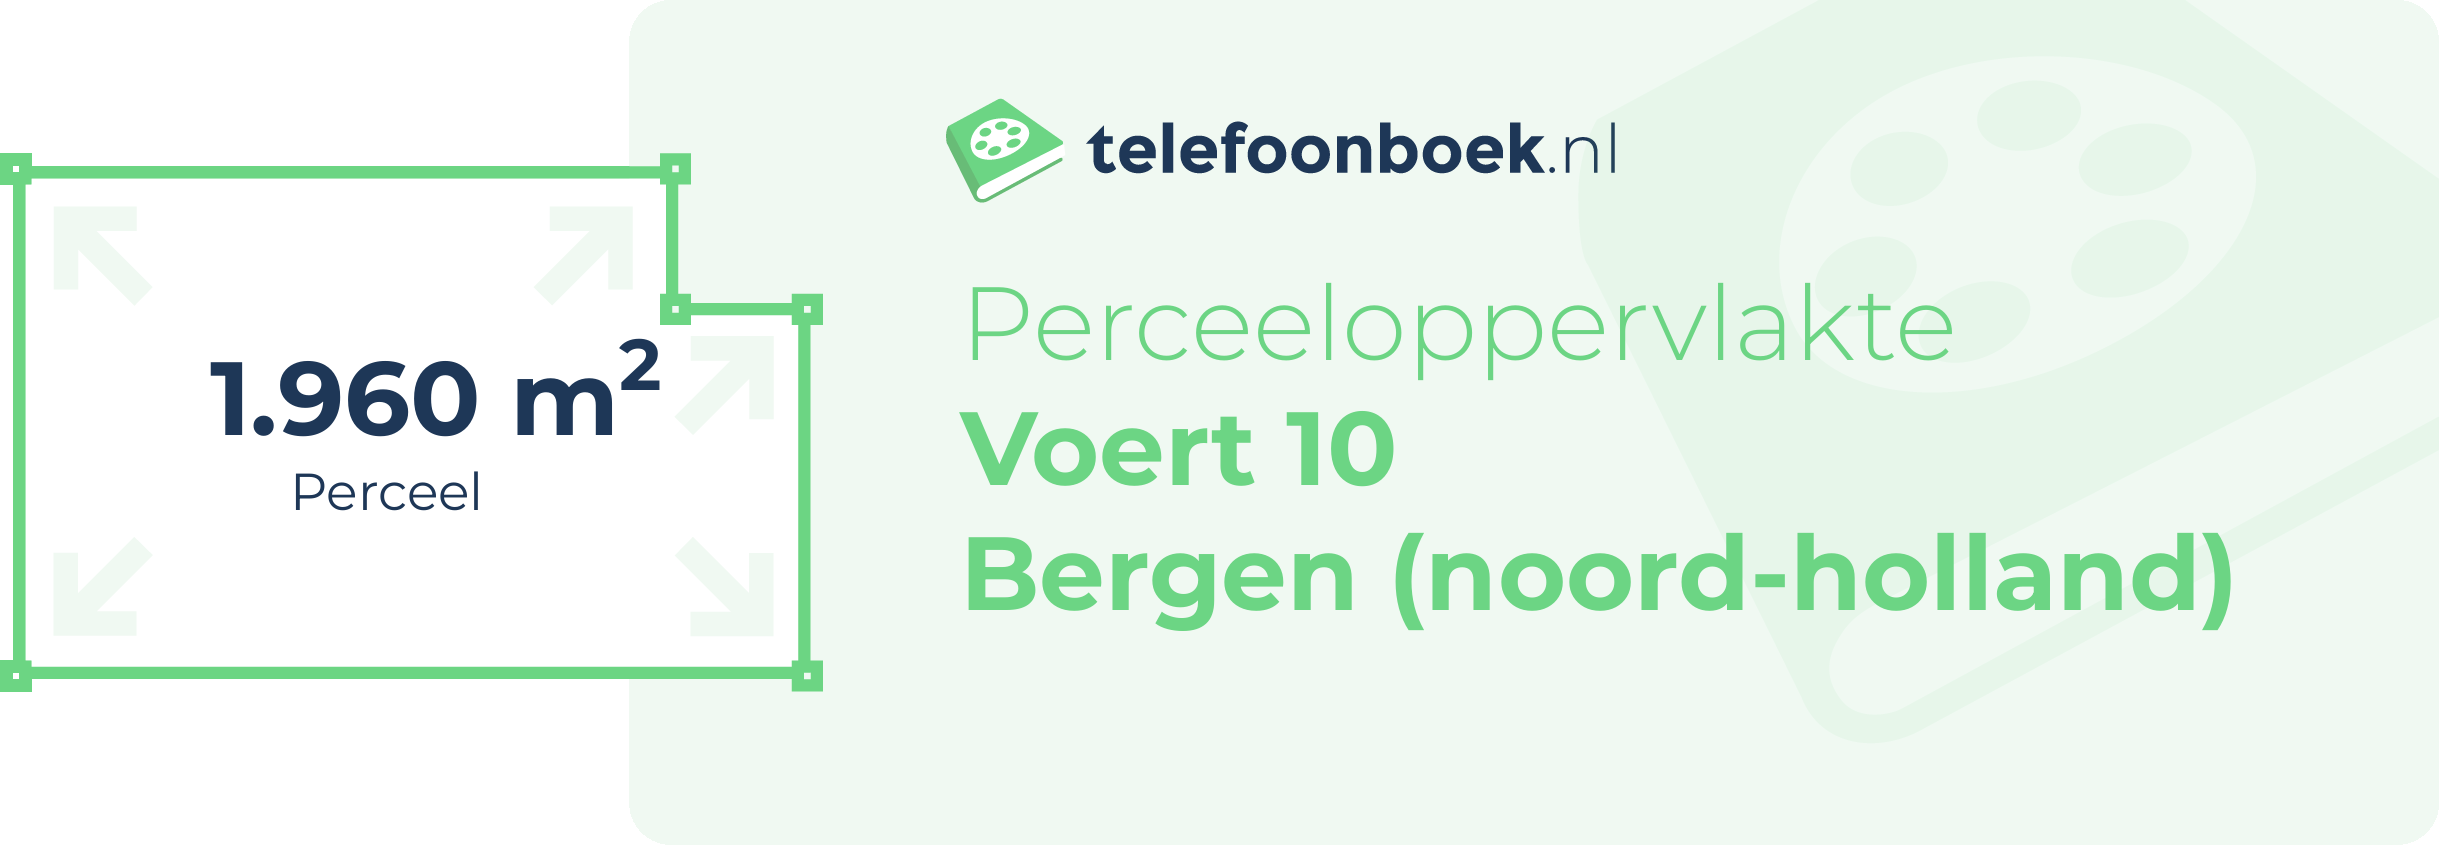 Perceeloppervlakte Voert 10 Bergen (Noord-Holland)